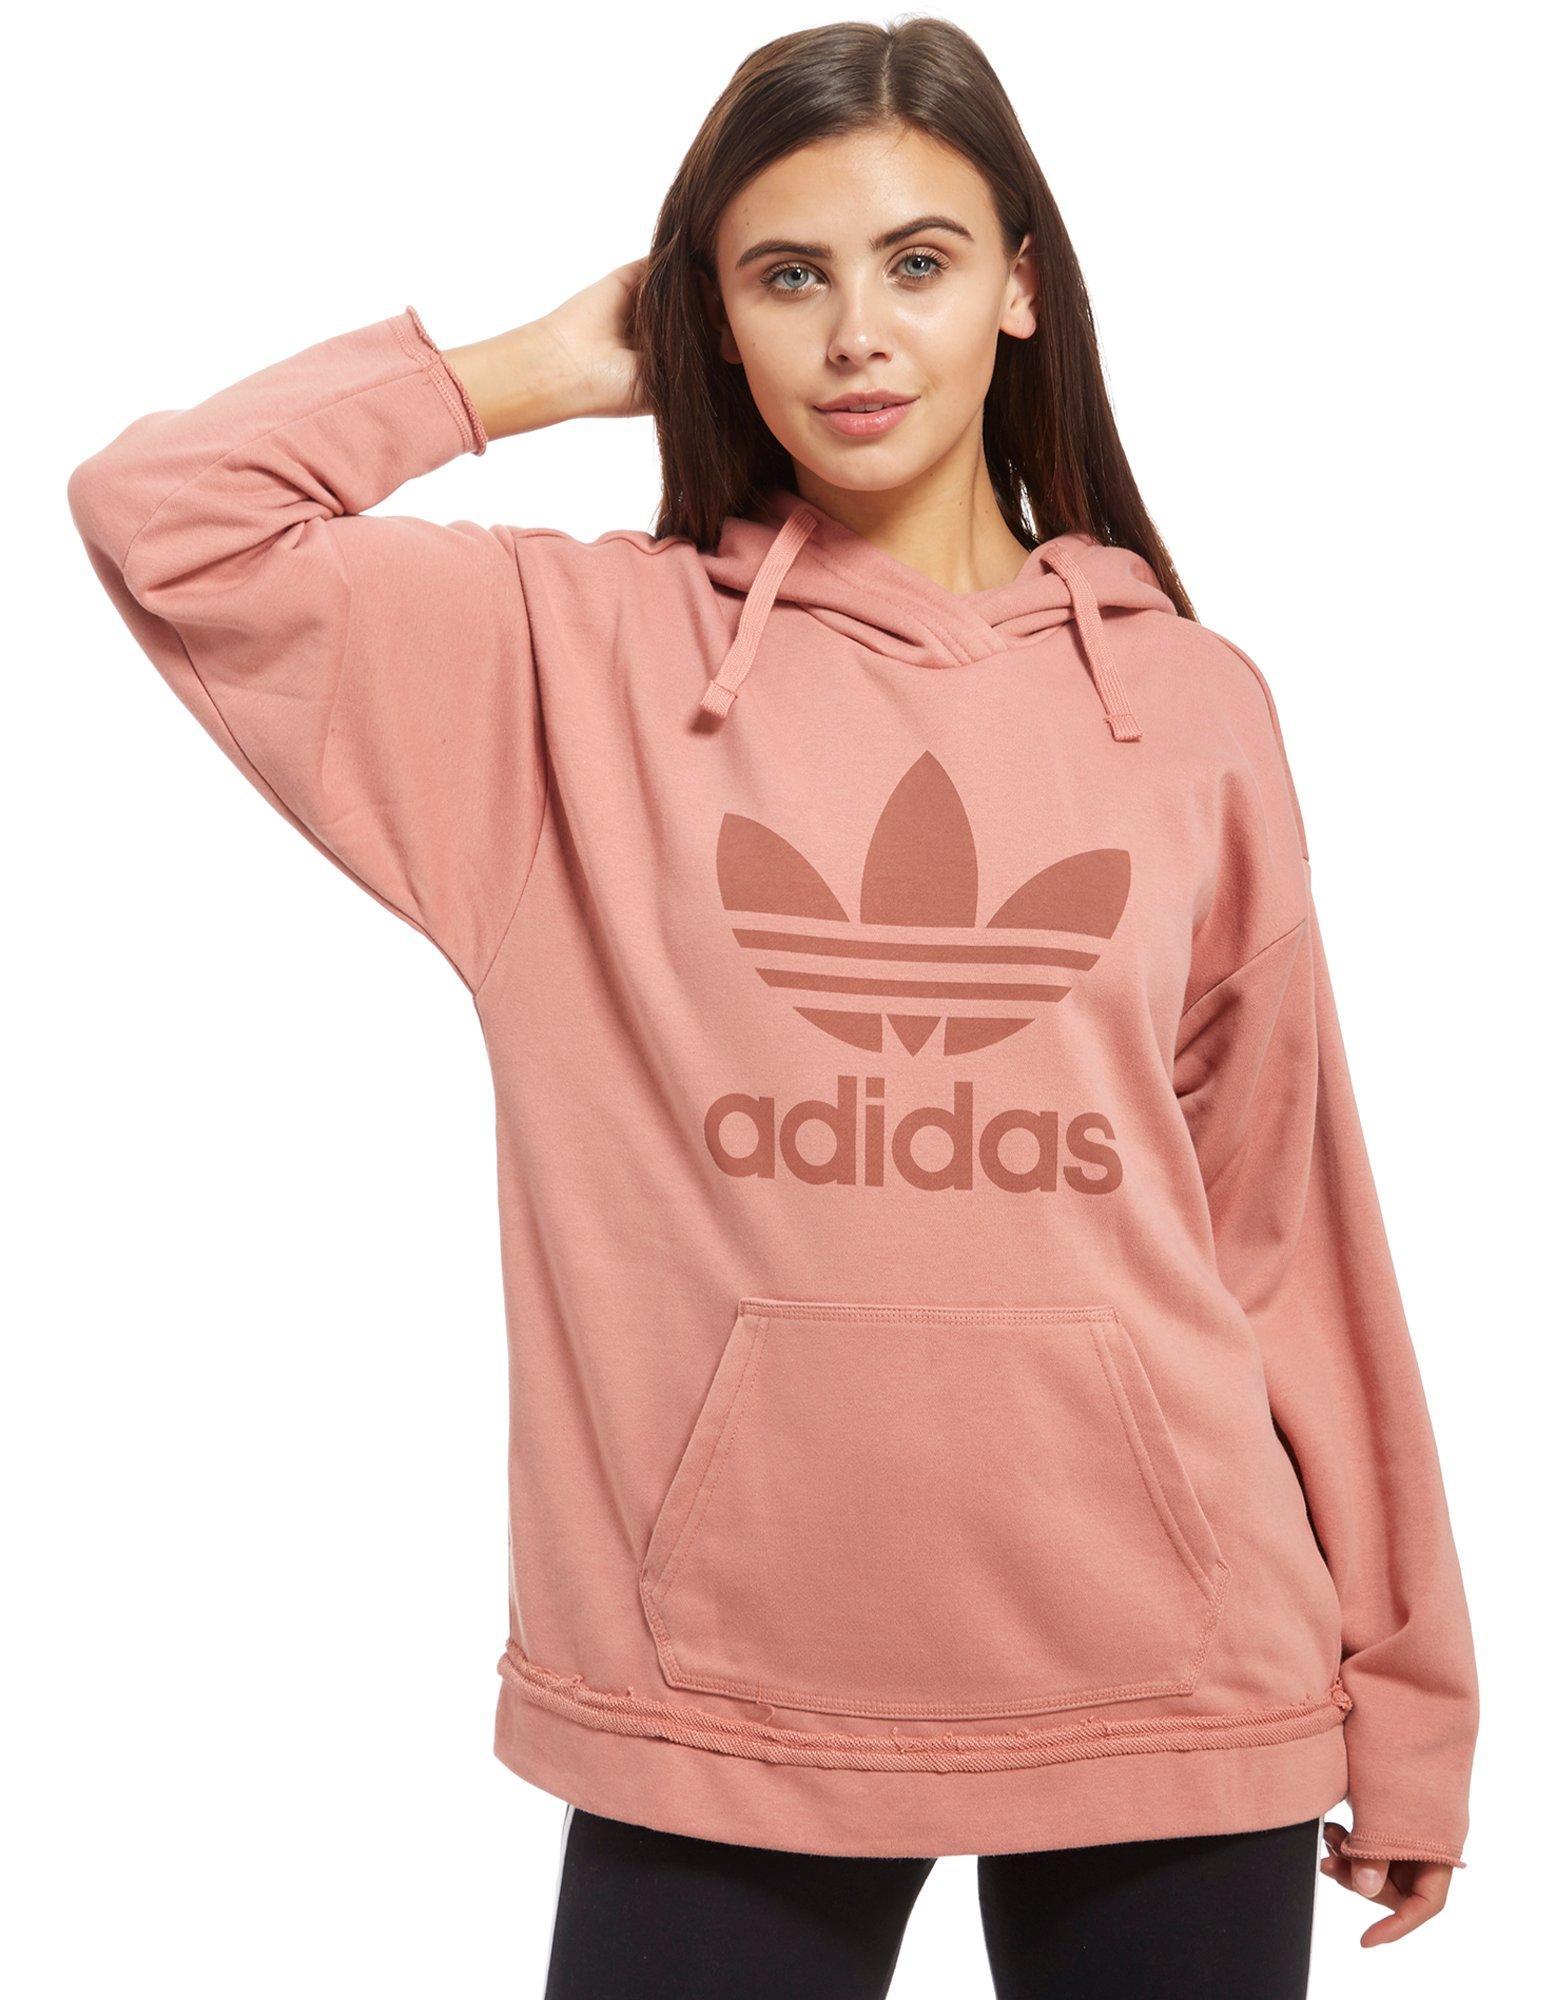 adidas raw pink hoodie